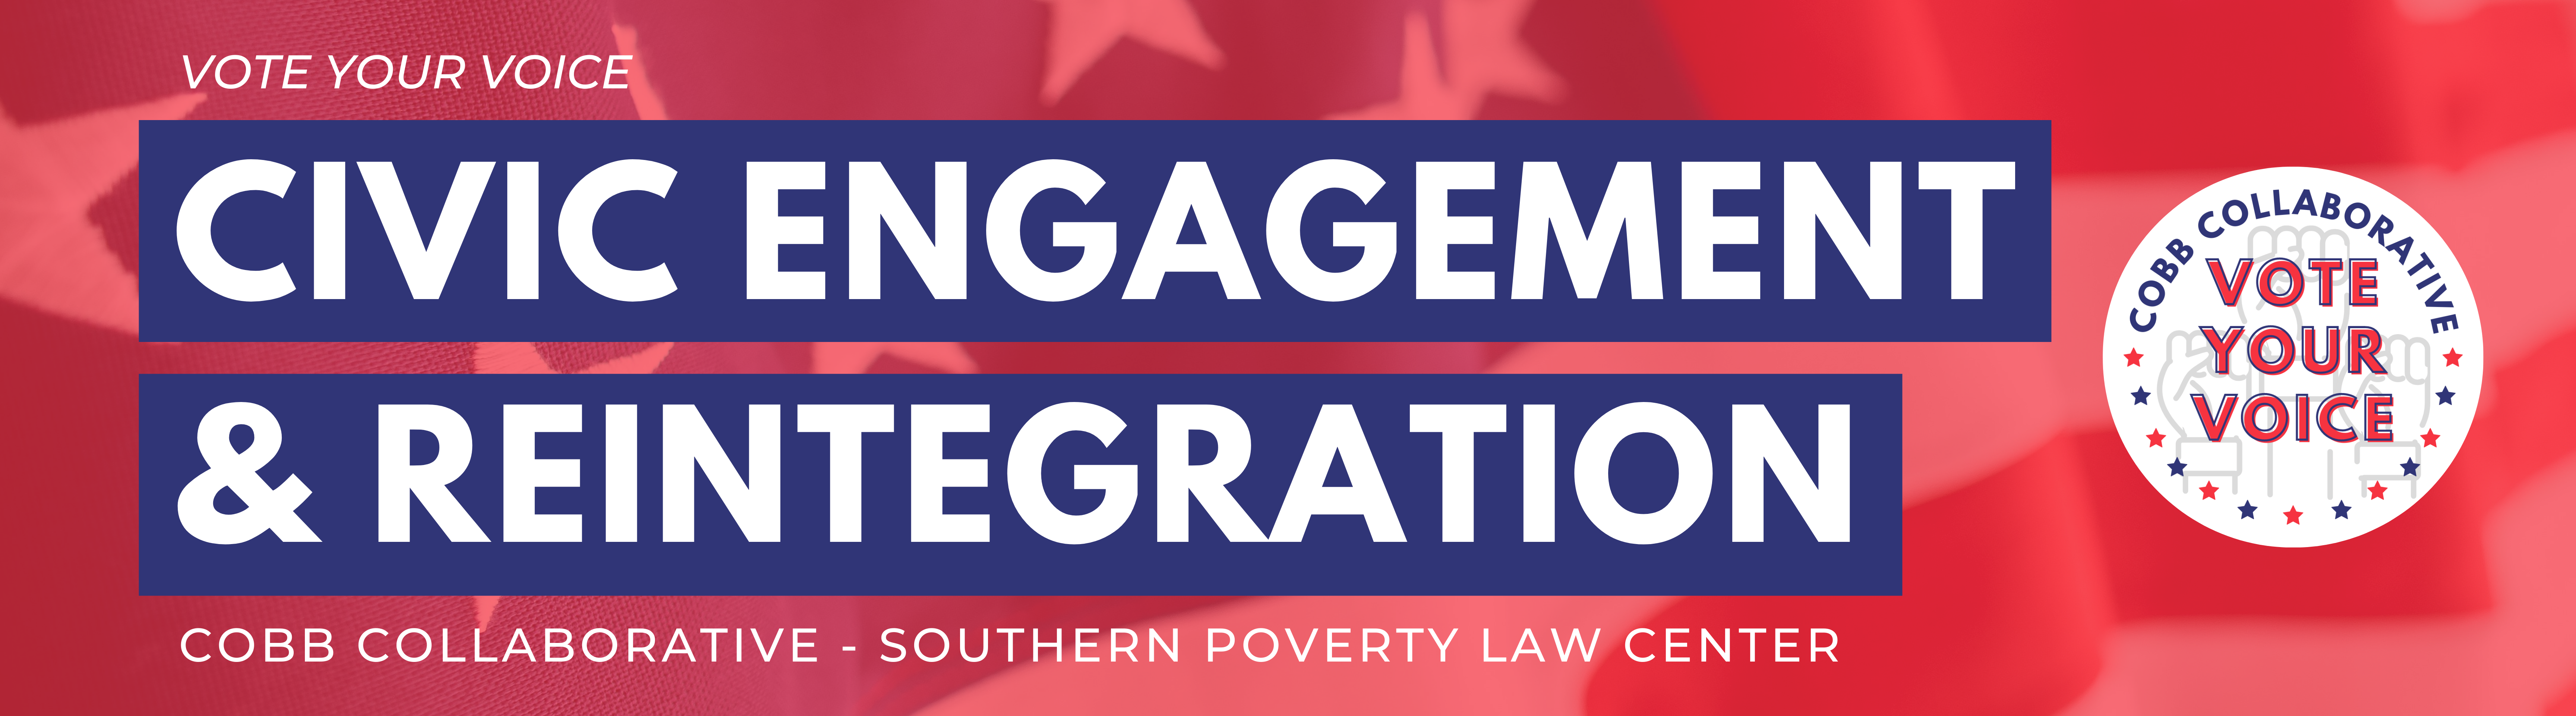 VYV Civic Engagement & Reintegration Banner